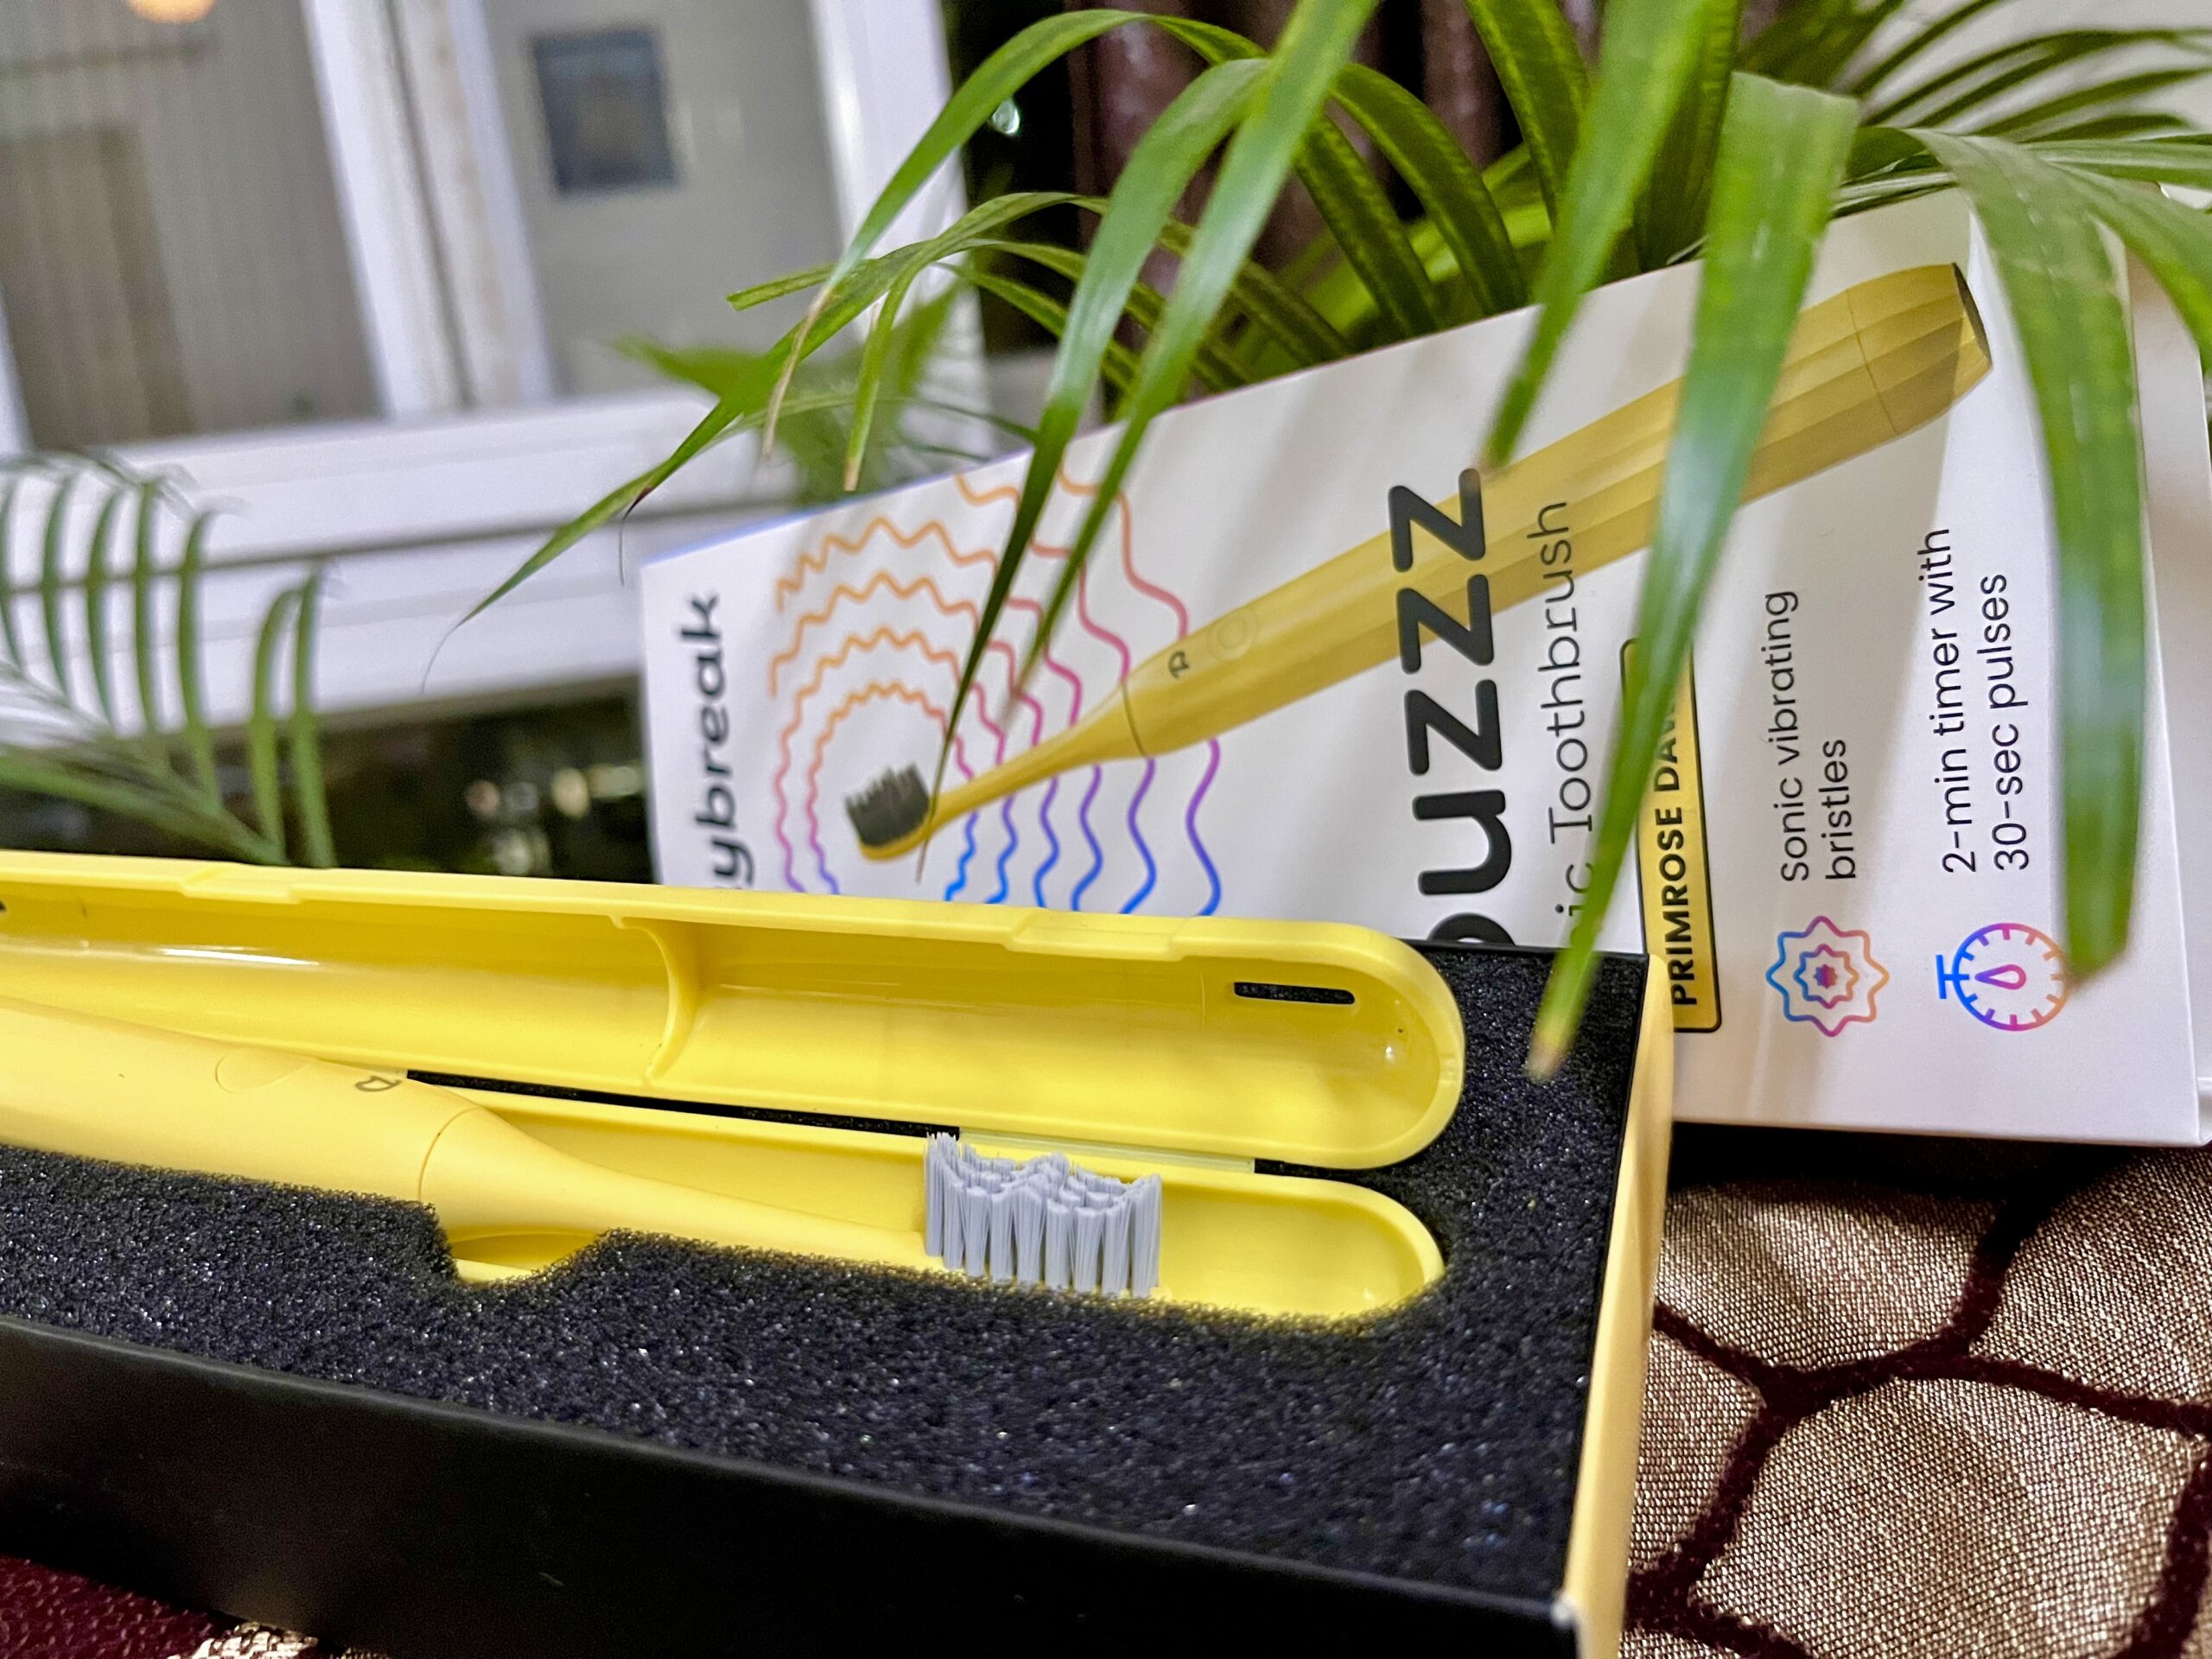 buzzz electric toothbrush by daybreak